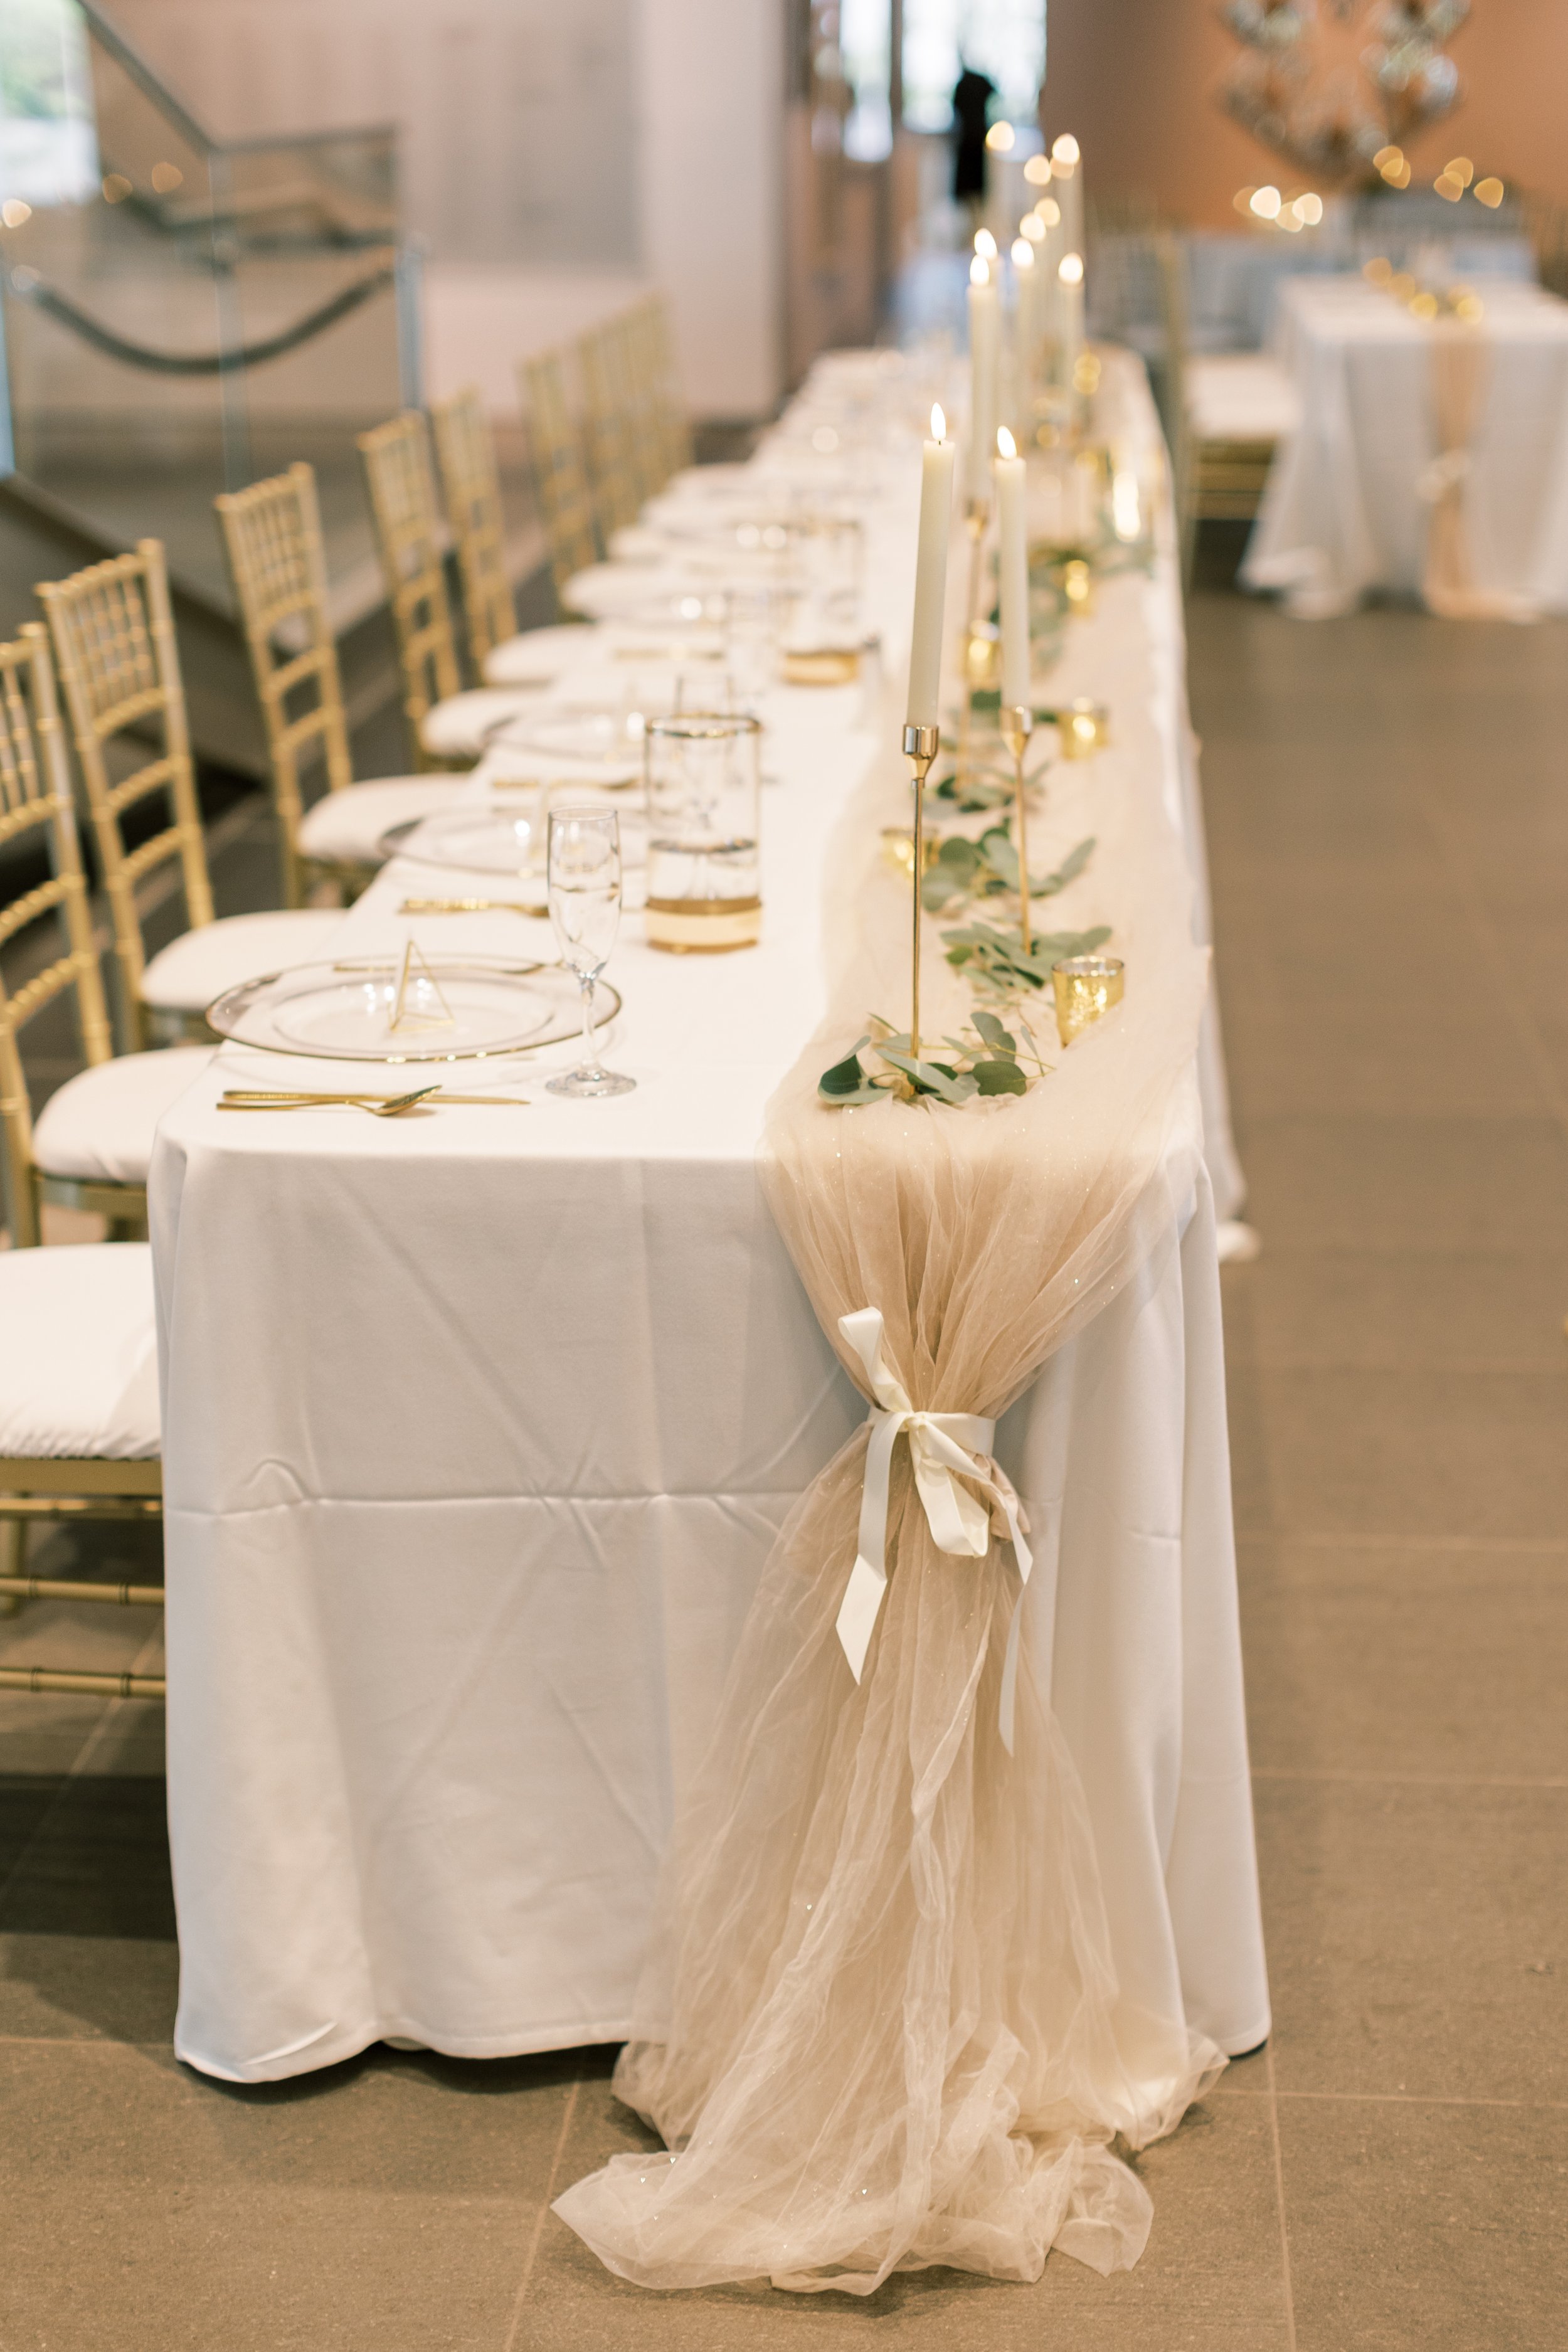 Ciesielski+Wedding+Reception+Details-36.jpg